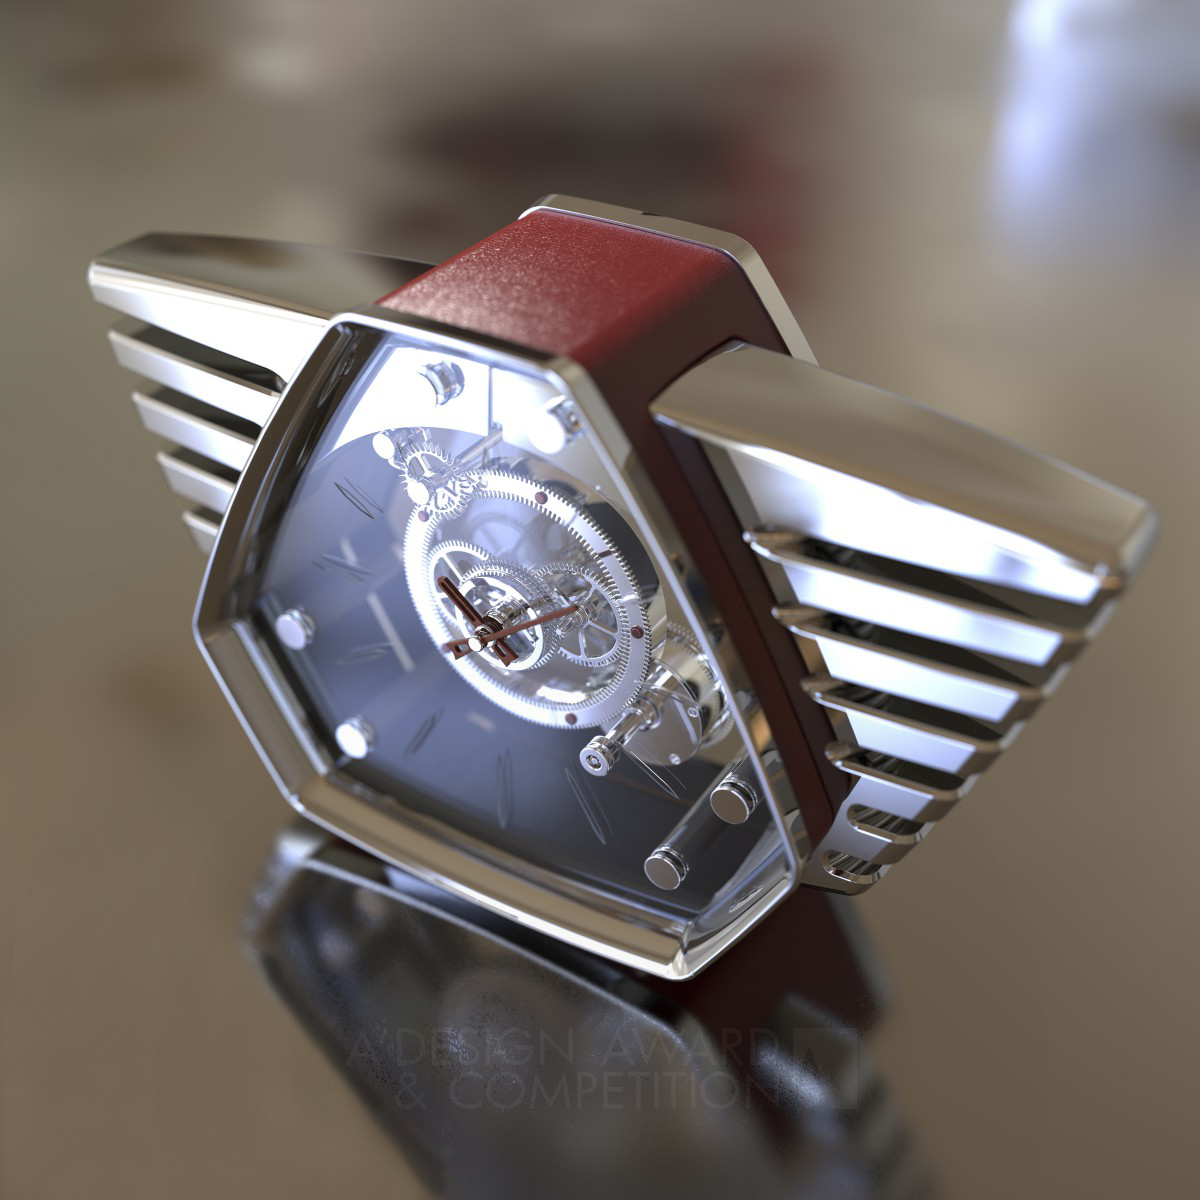 Enrico Ferraris wins Bronze at the prestigious A' Limited Edition and Custom Design Award with Monza Table Pendulum Clock.